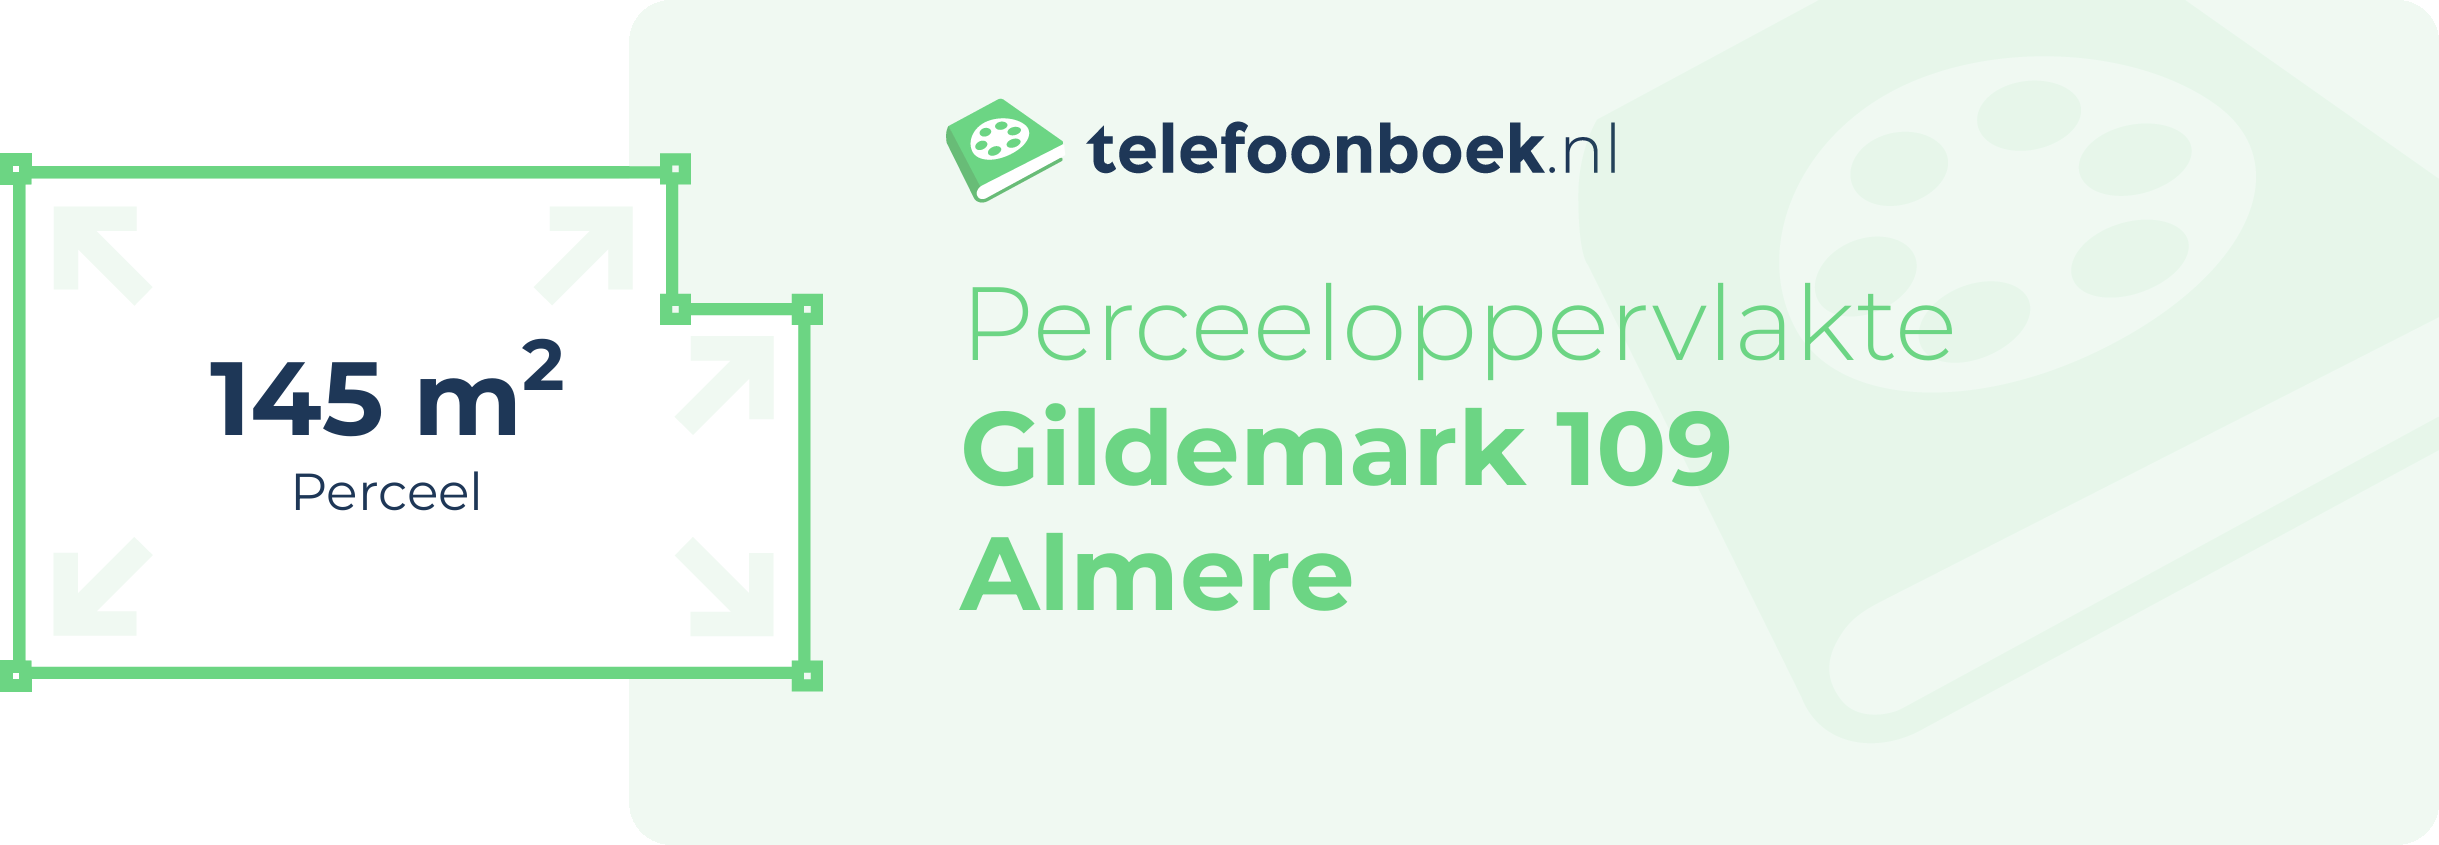 Perceeloppervlakte Gildemark 109 Almere